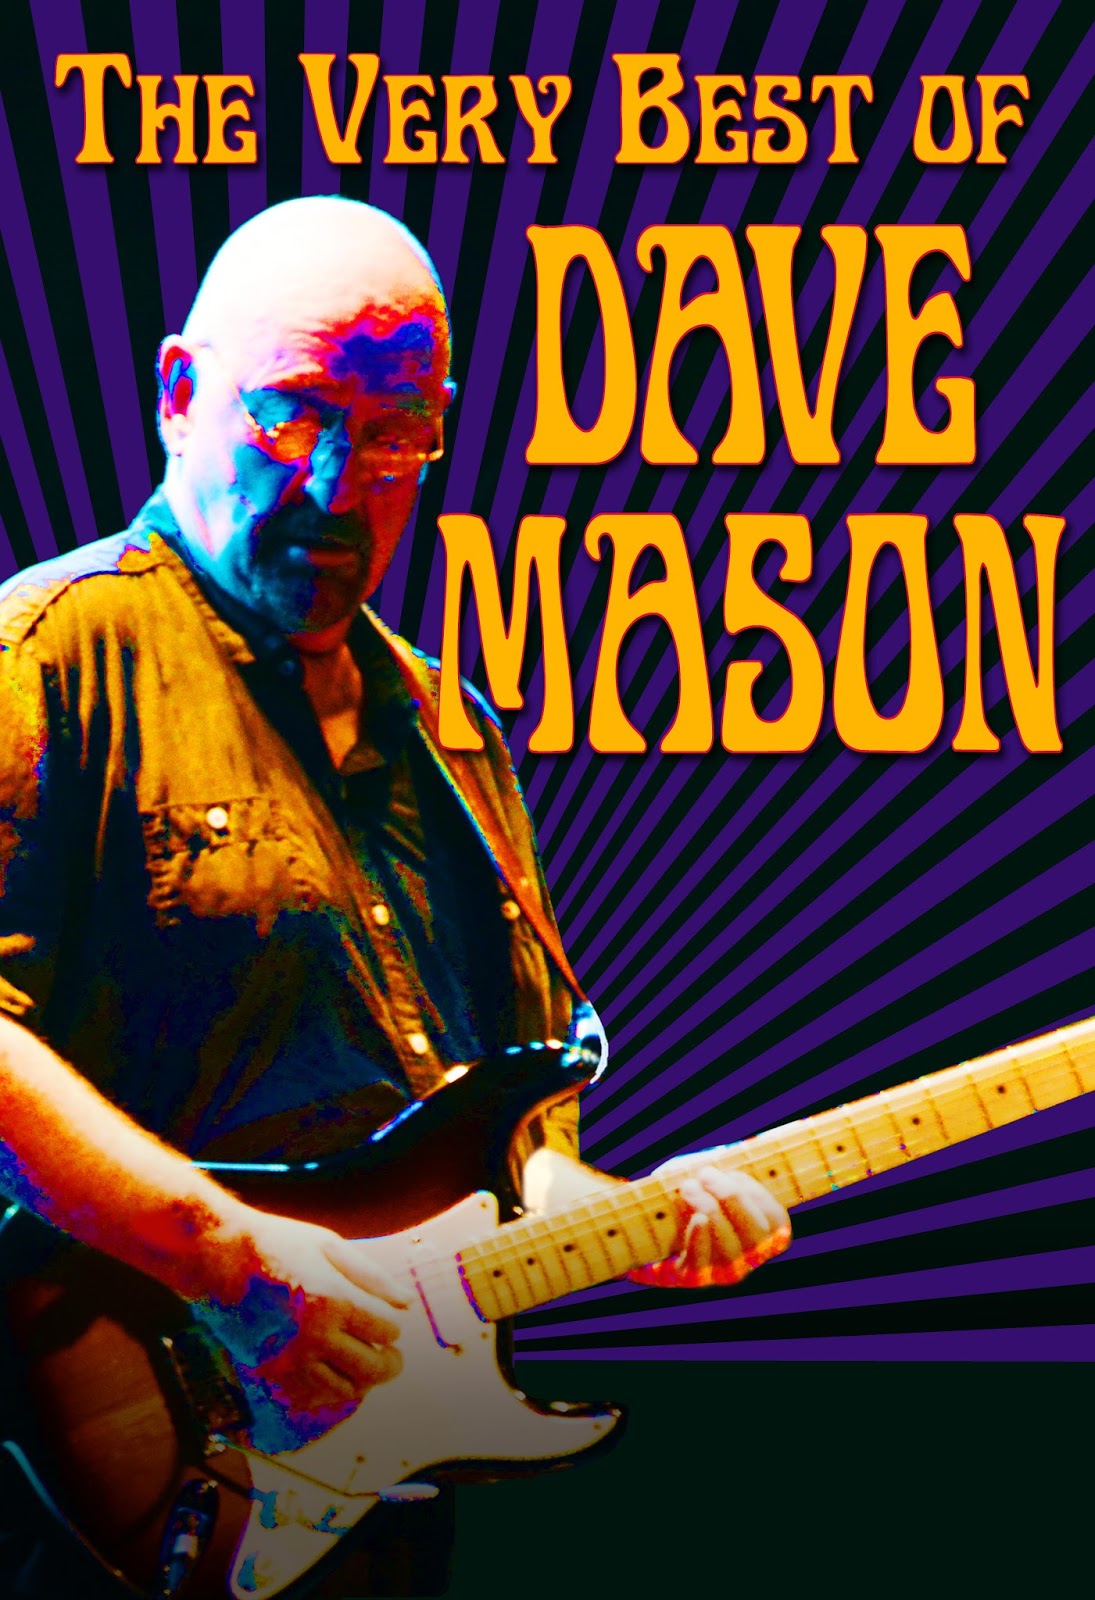 dave mason tour schedule